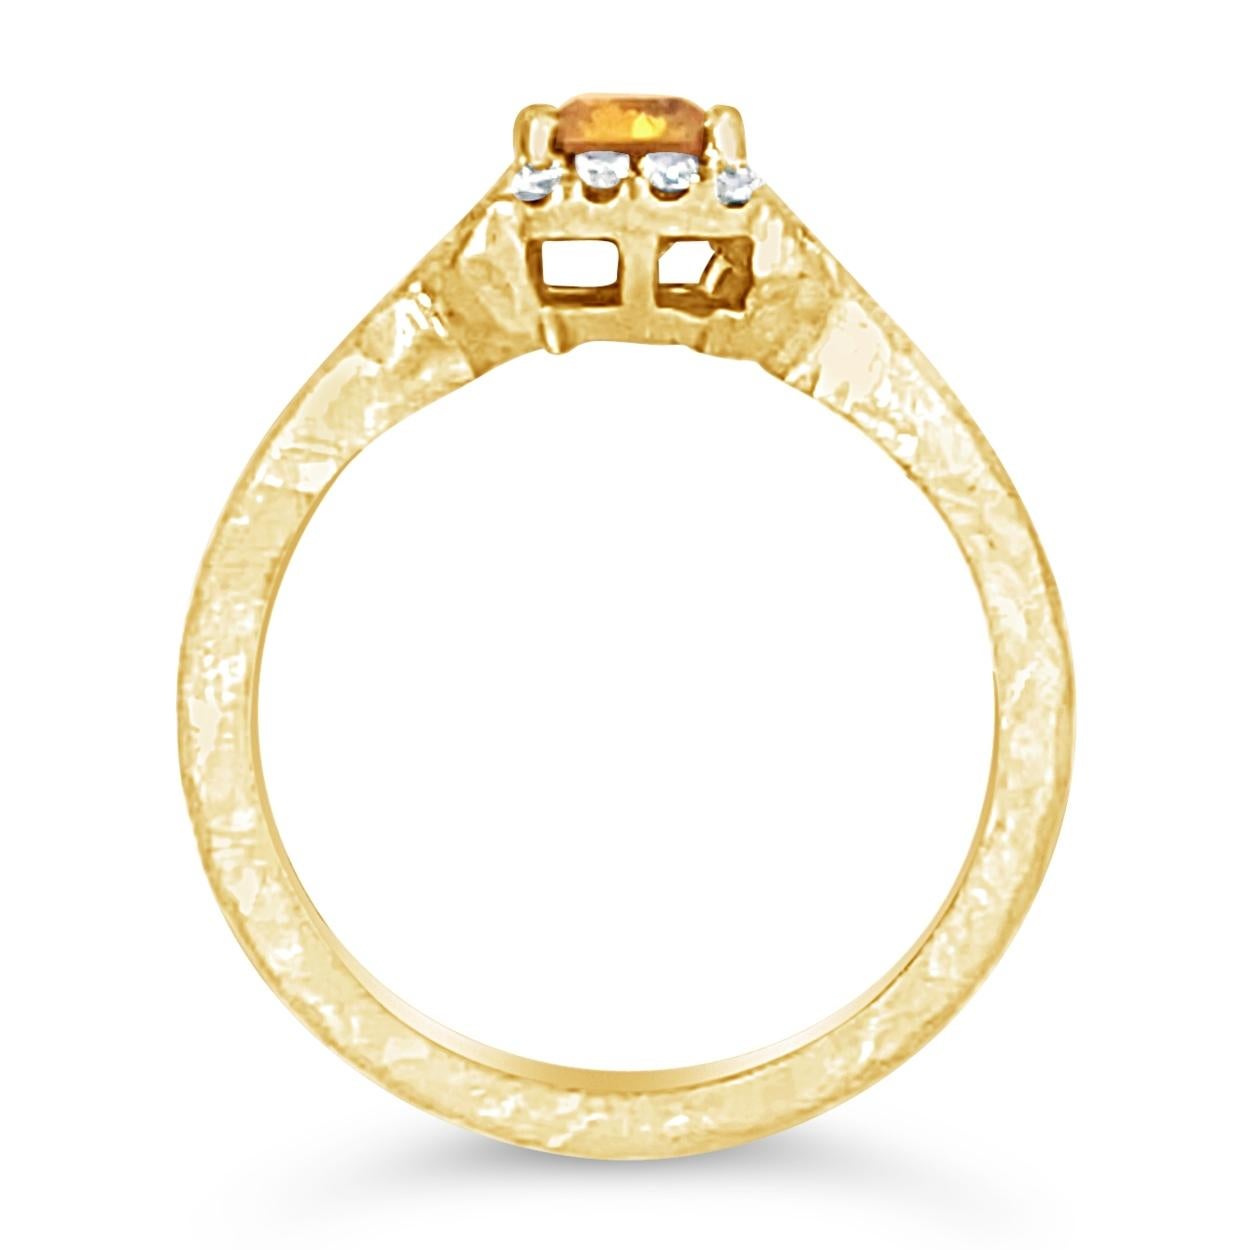 Art Nouveau 18K Hand-Hammered Engagement Ring with 0.80 Carat Orange Diamond Center For Sale